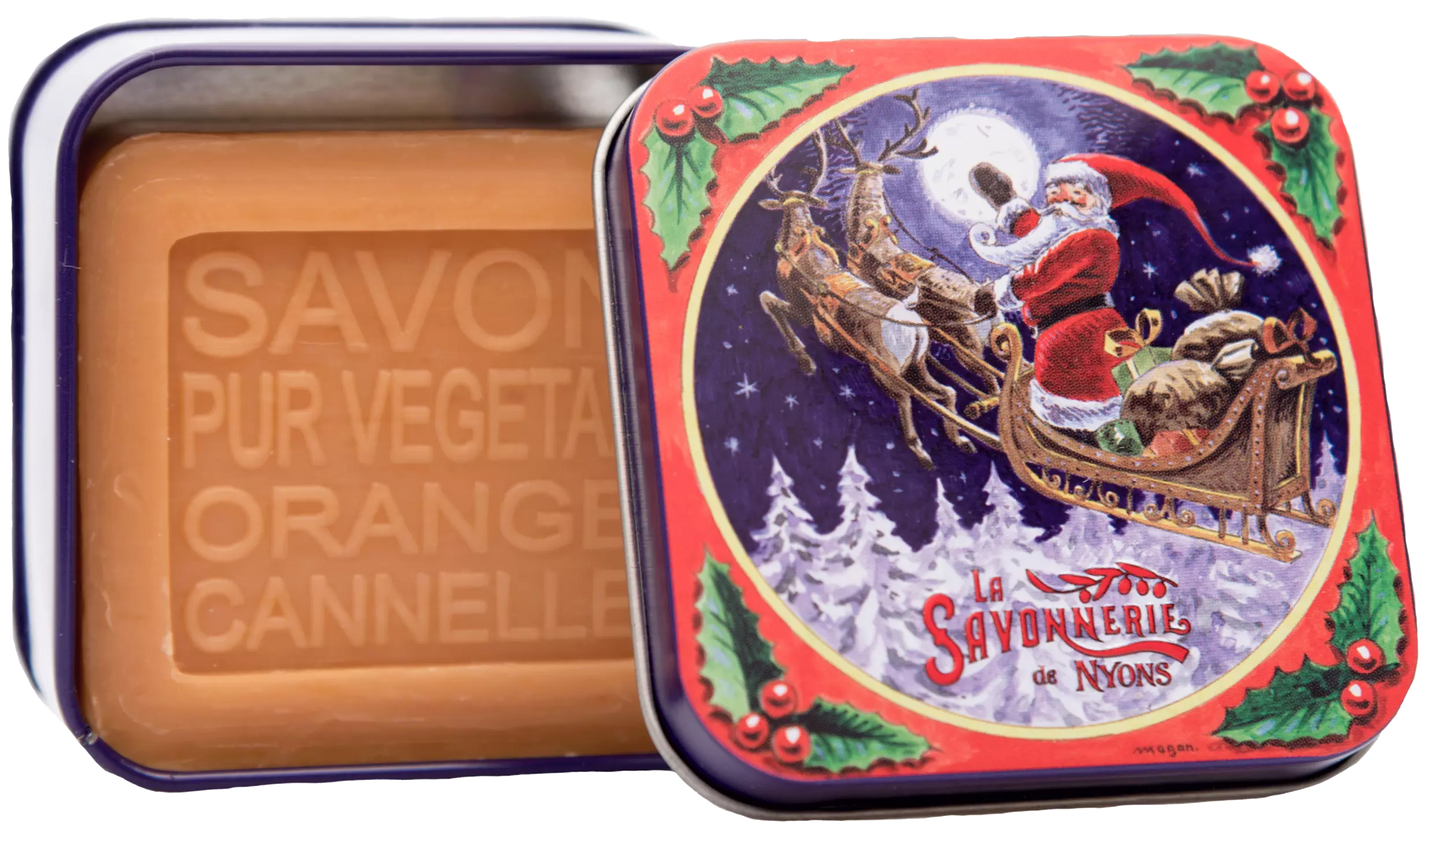 Orange-Cinnamon Soap "Santa's Sleigh" Tin Box 3.5oz